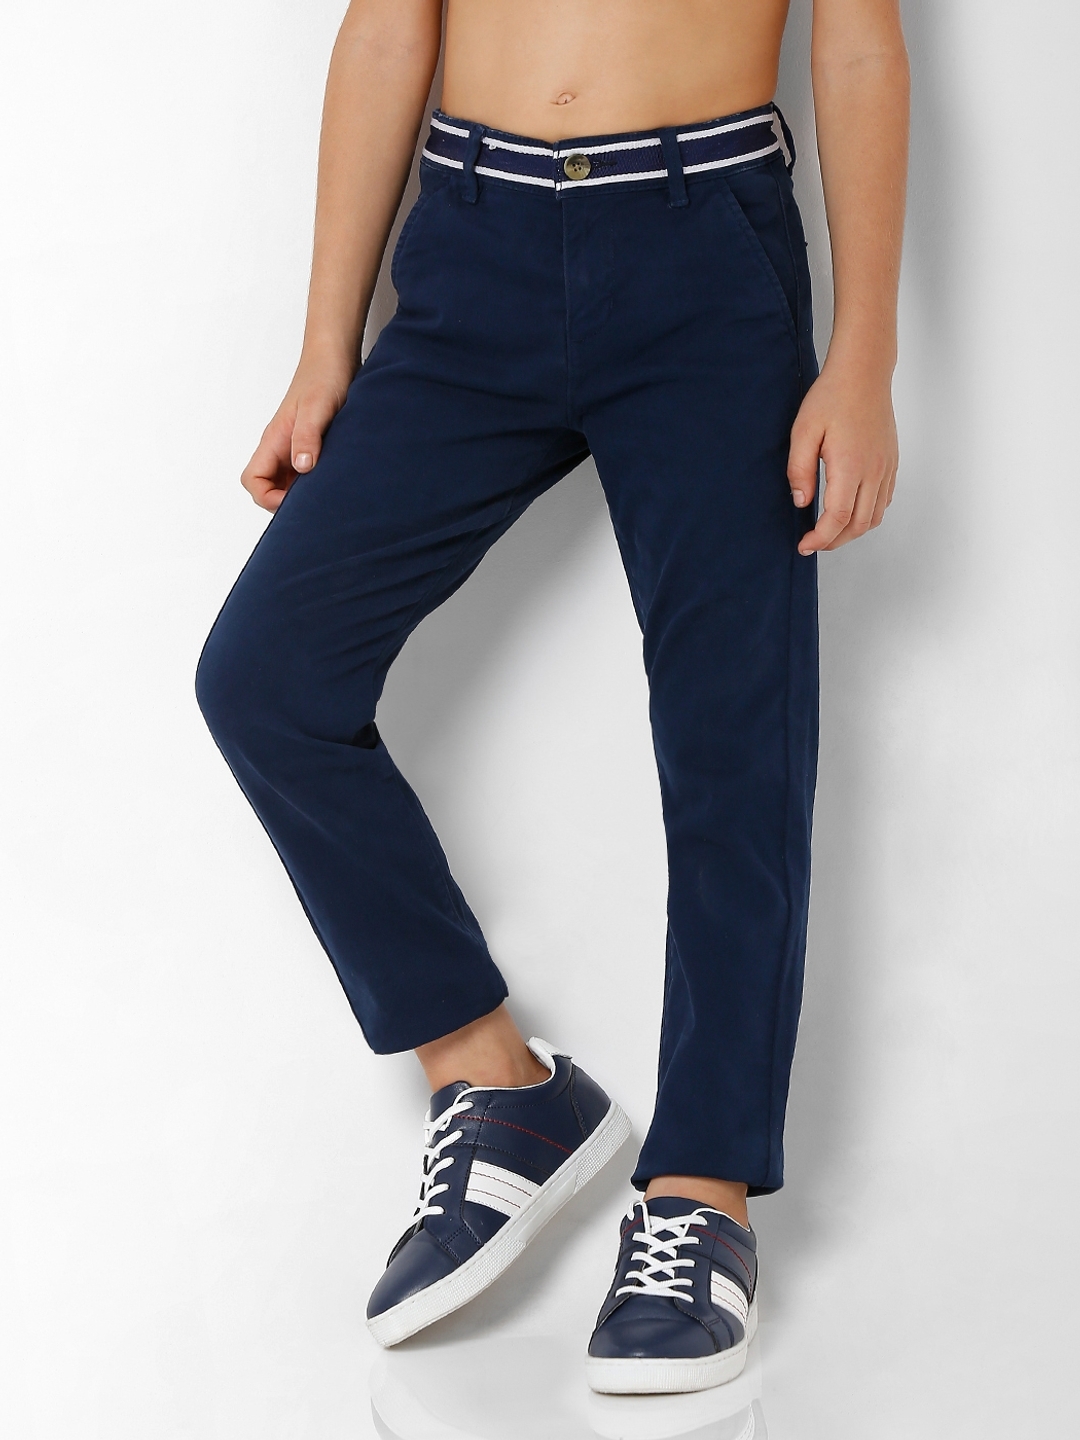 fcityin  Elanhood Blue Slim Fit Formal Trouser For Mens  Fashionable  Modern